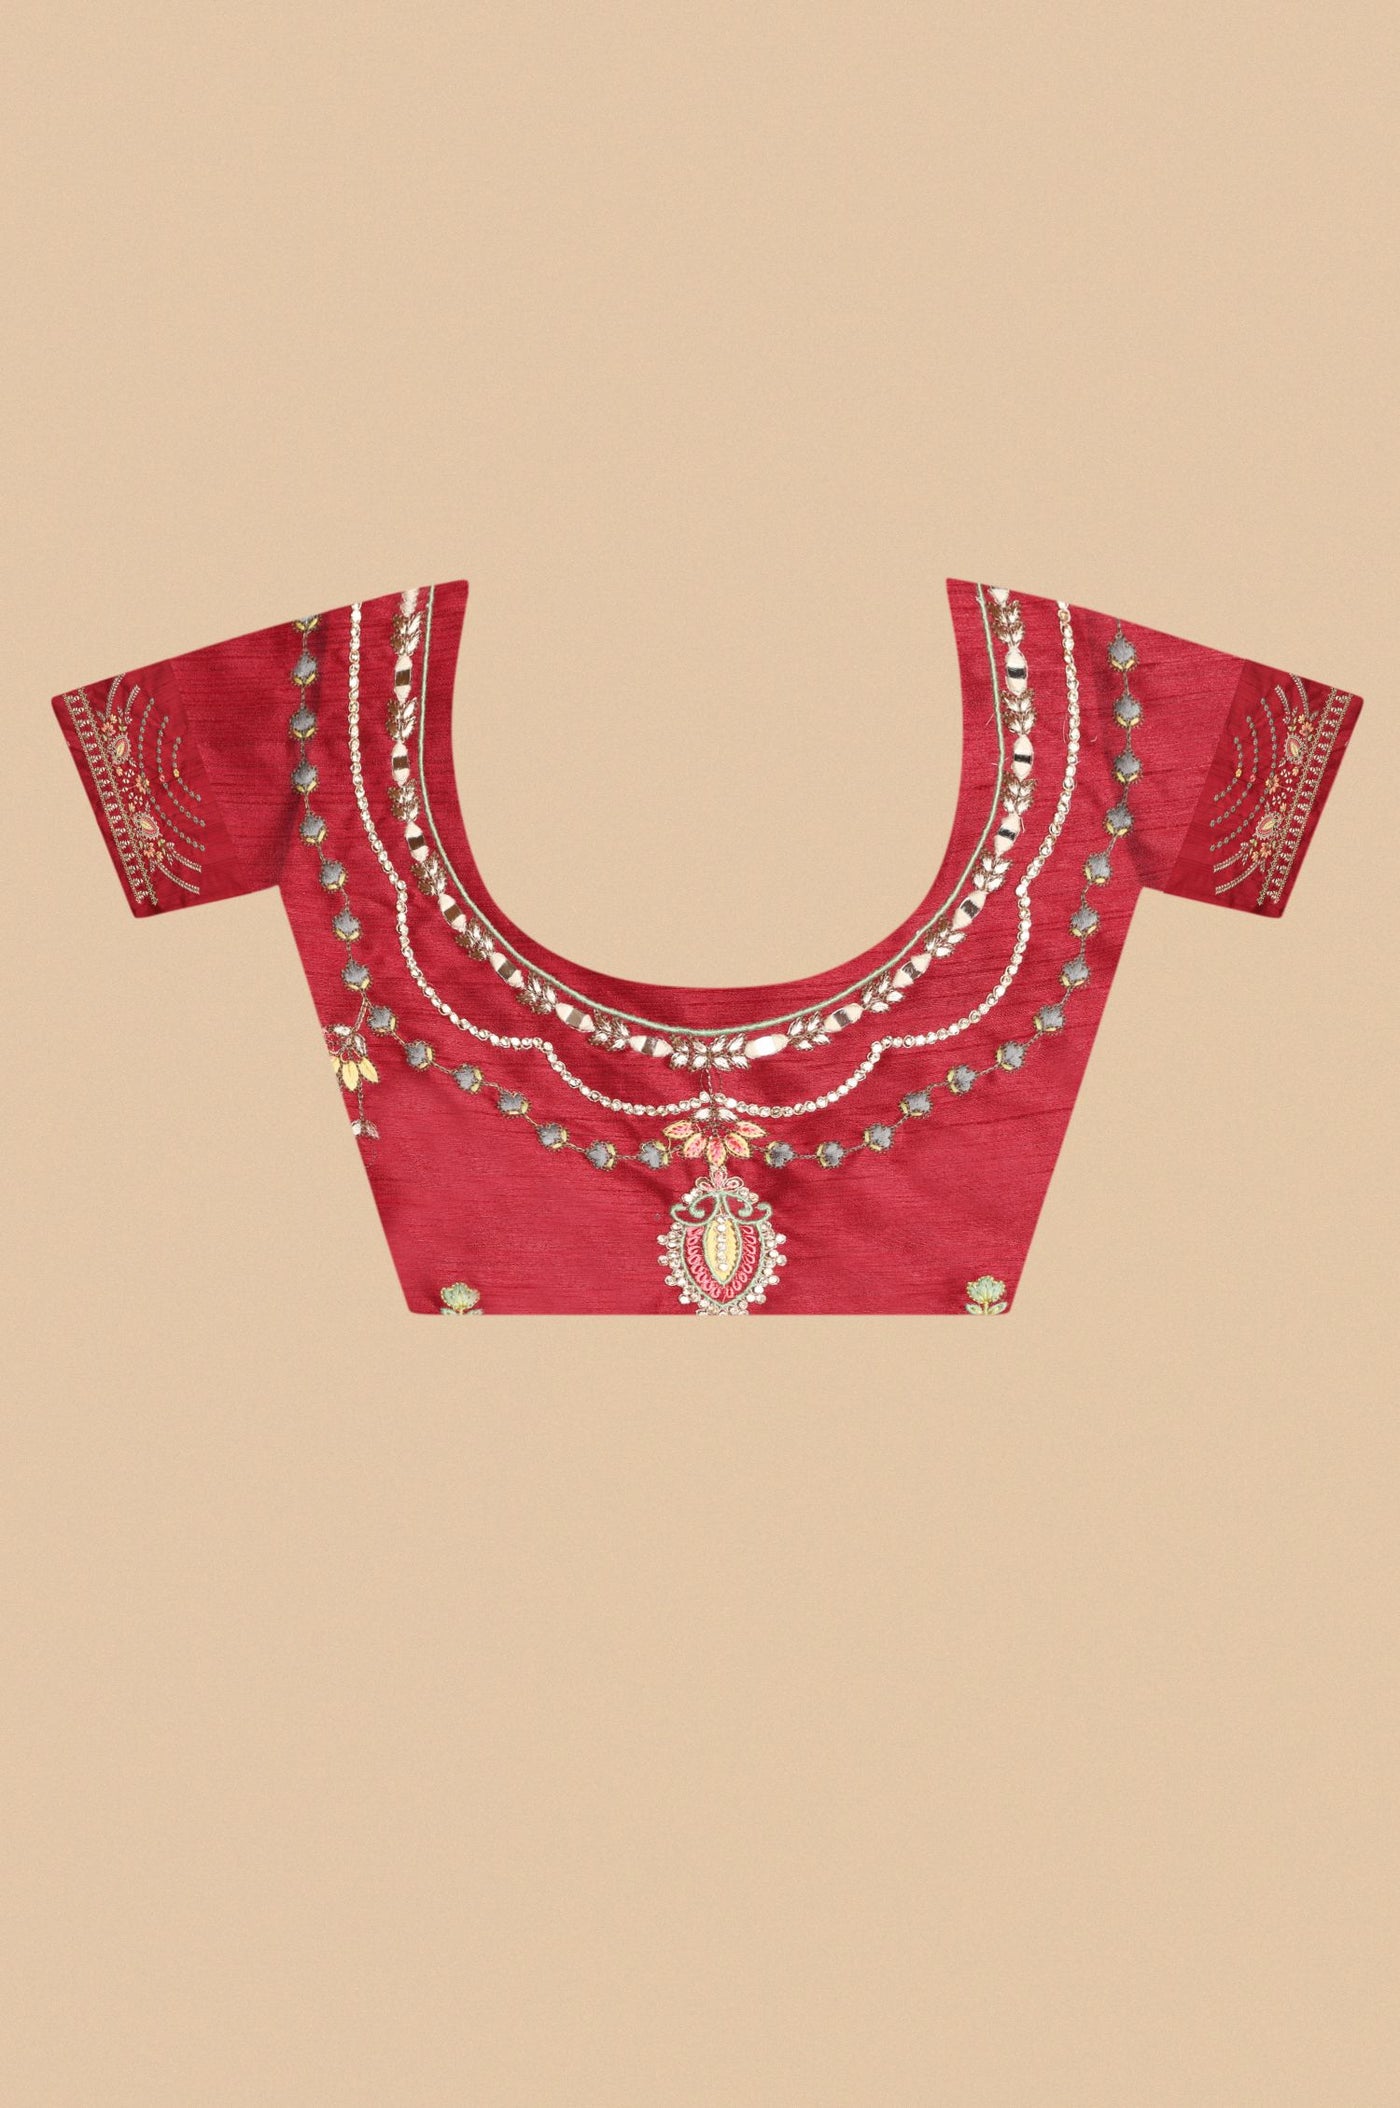 Radiant Elegance: Peach Color Silk Saree with Thread Work, Sequins, and Zari Embellishments"